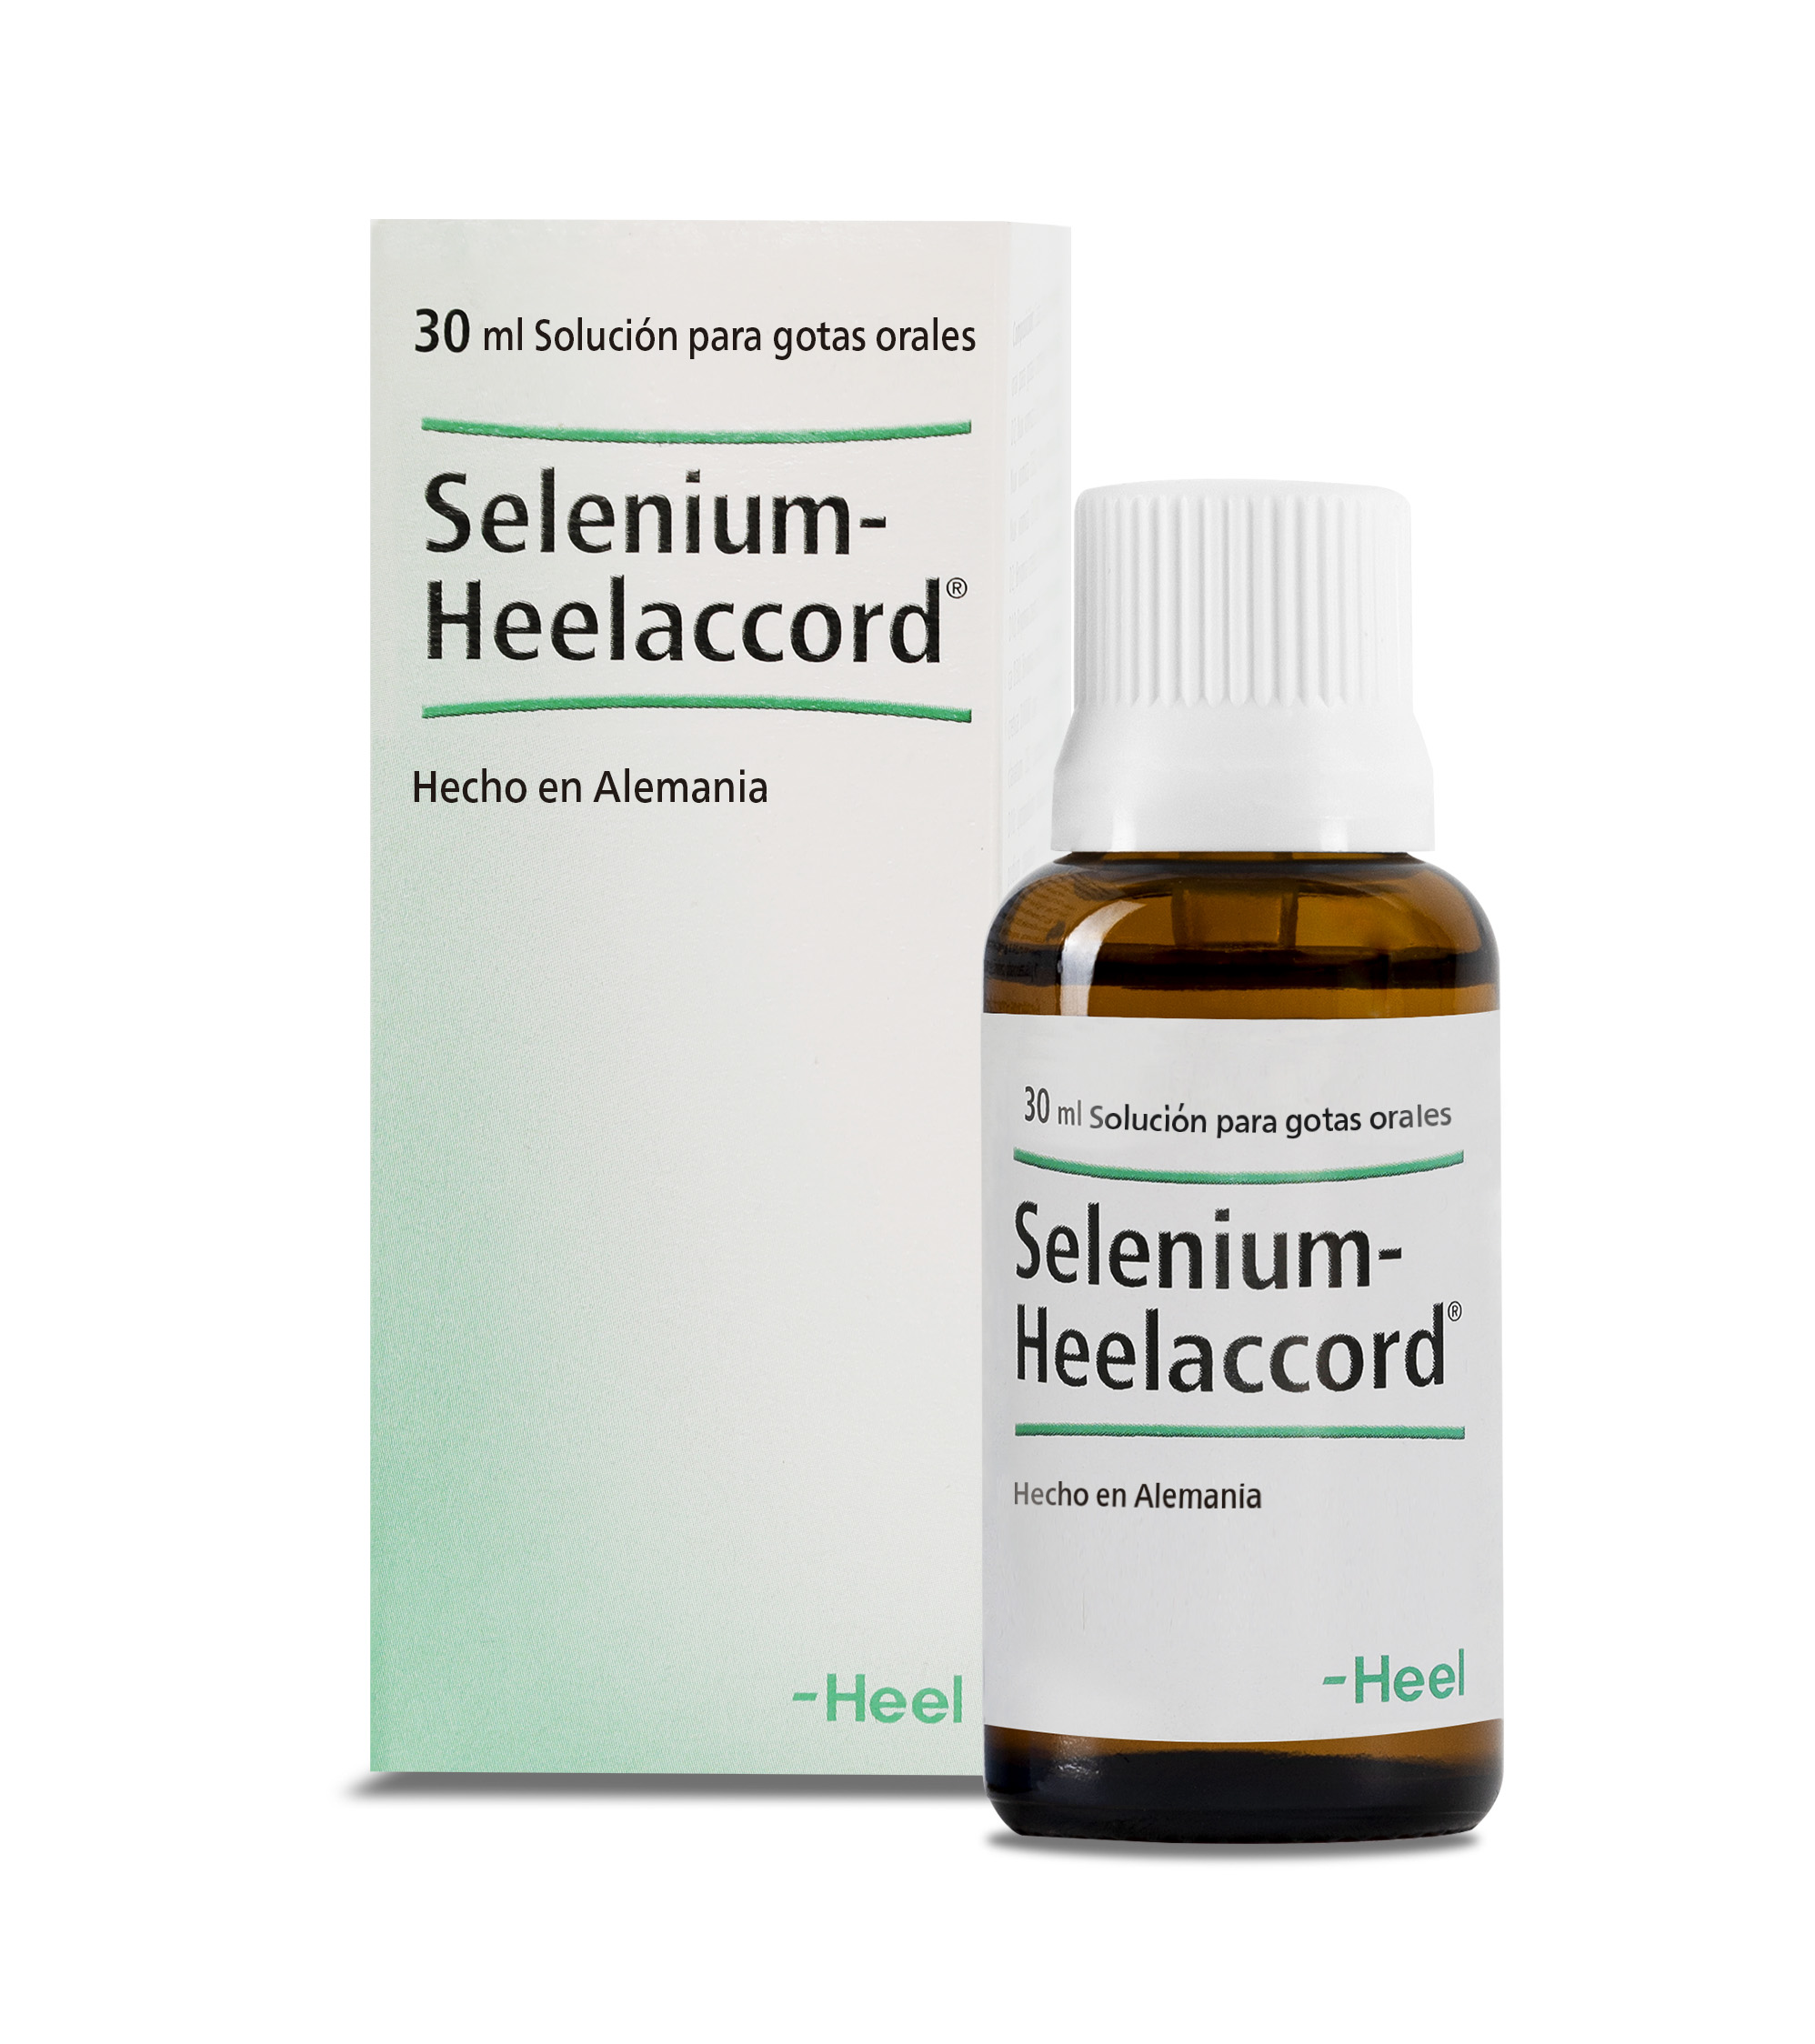 Selenium-Heelaccord® Gotas